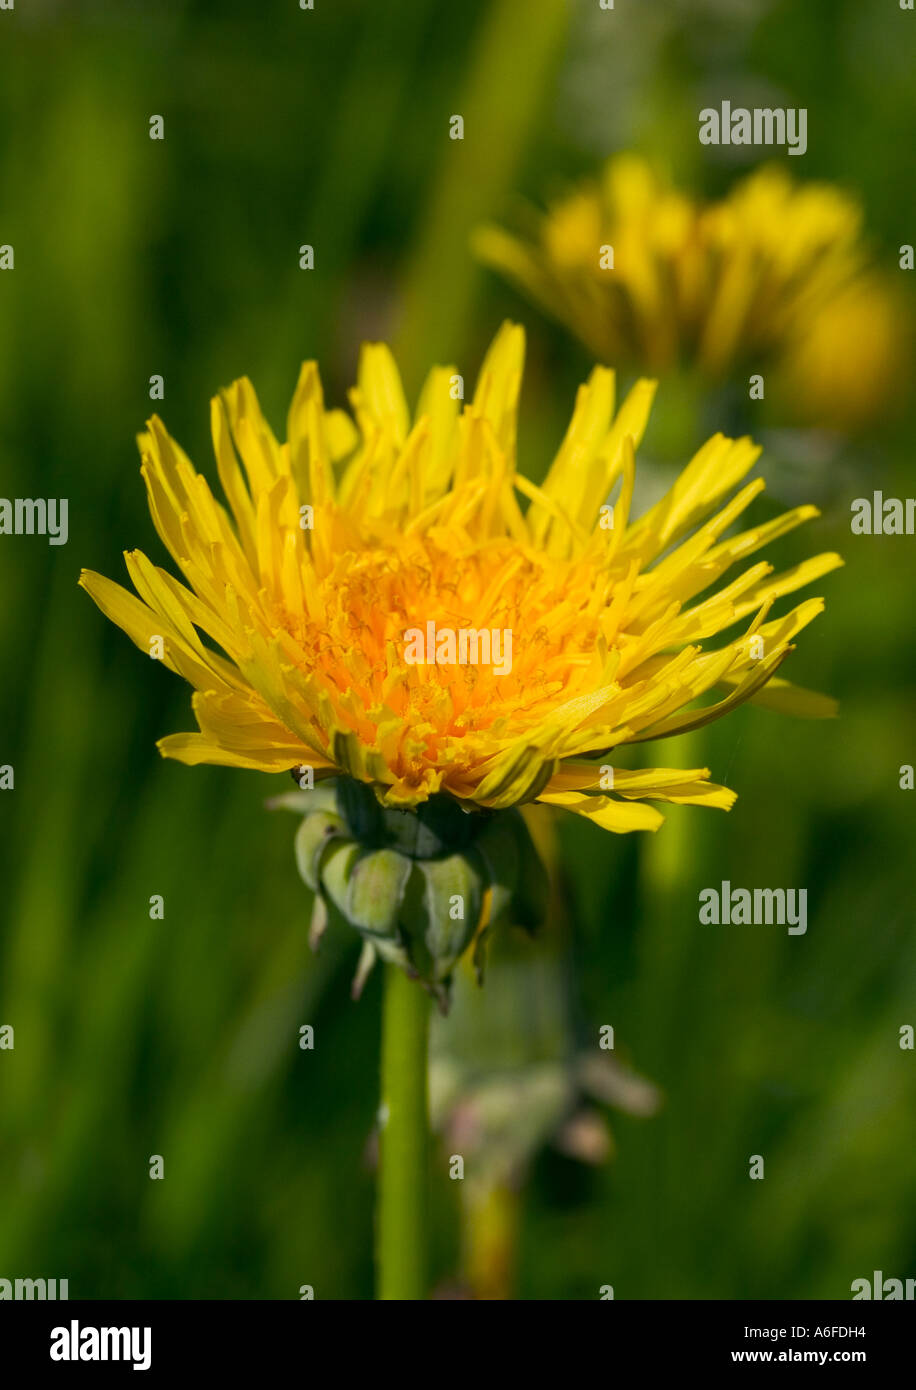 Close up shot of Dandelion 'Taraxacum offiicinale' shot in natural environment Stock Photo